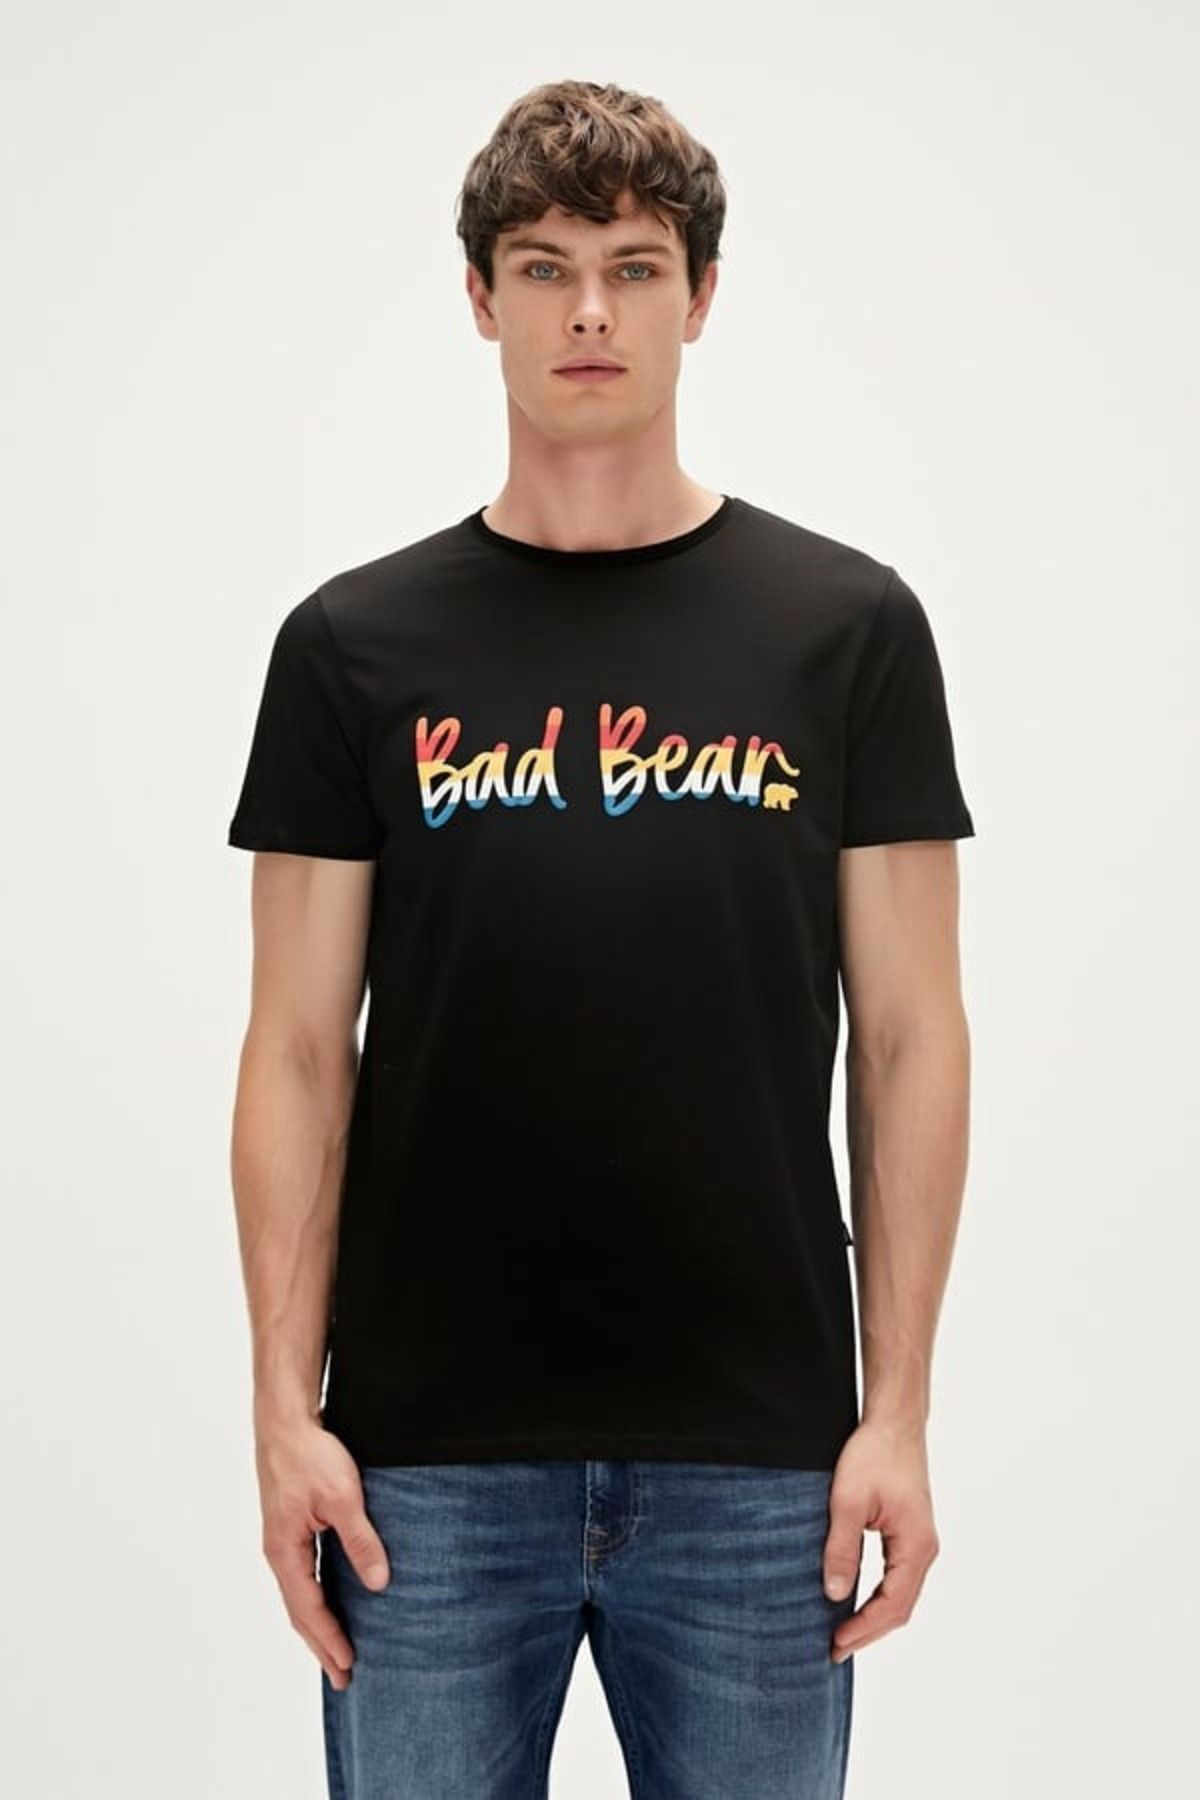 Bad Bear Manuscrıpt Erkek T-shirt 23.01.07.008 Nıght